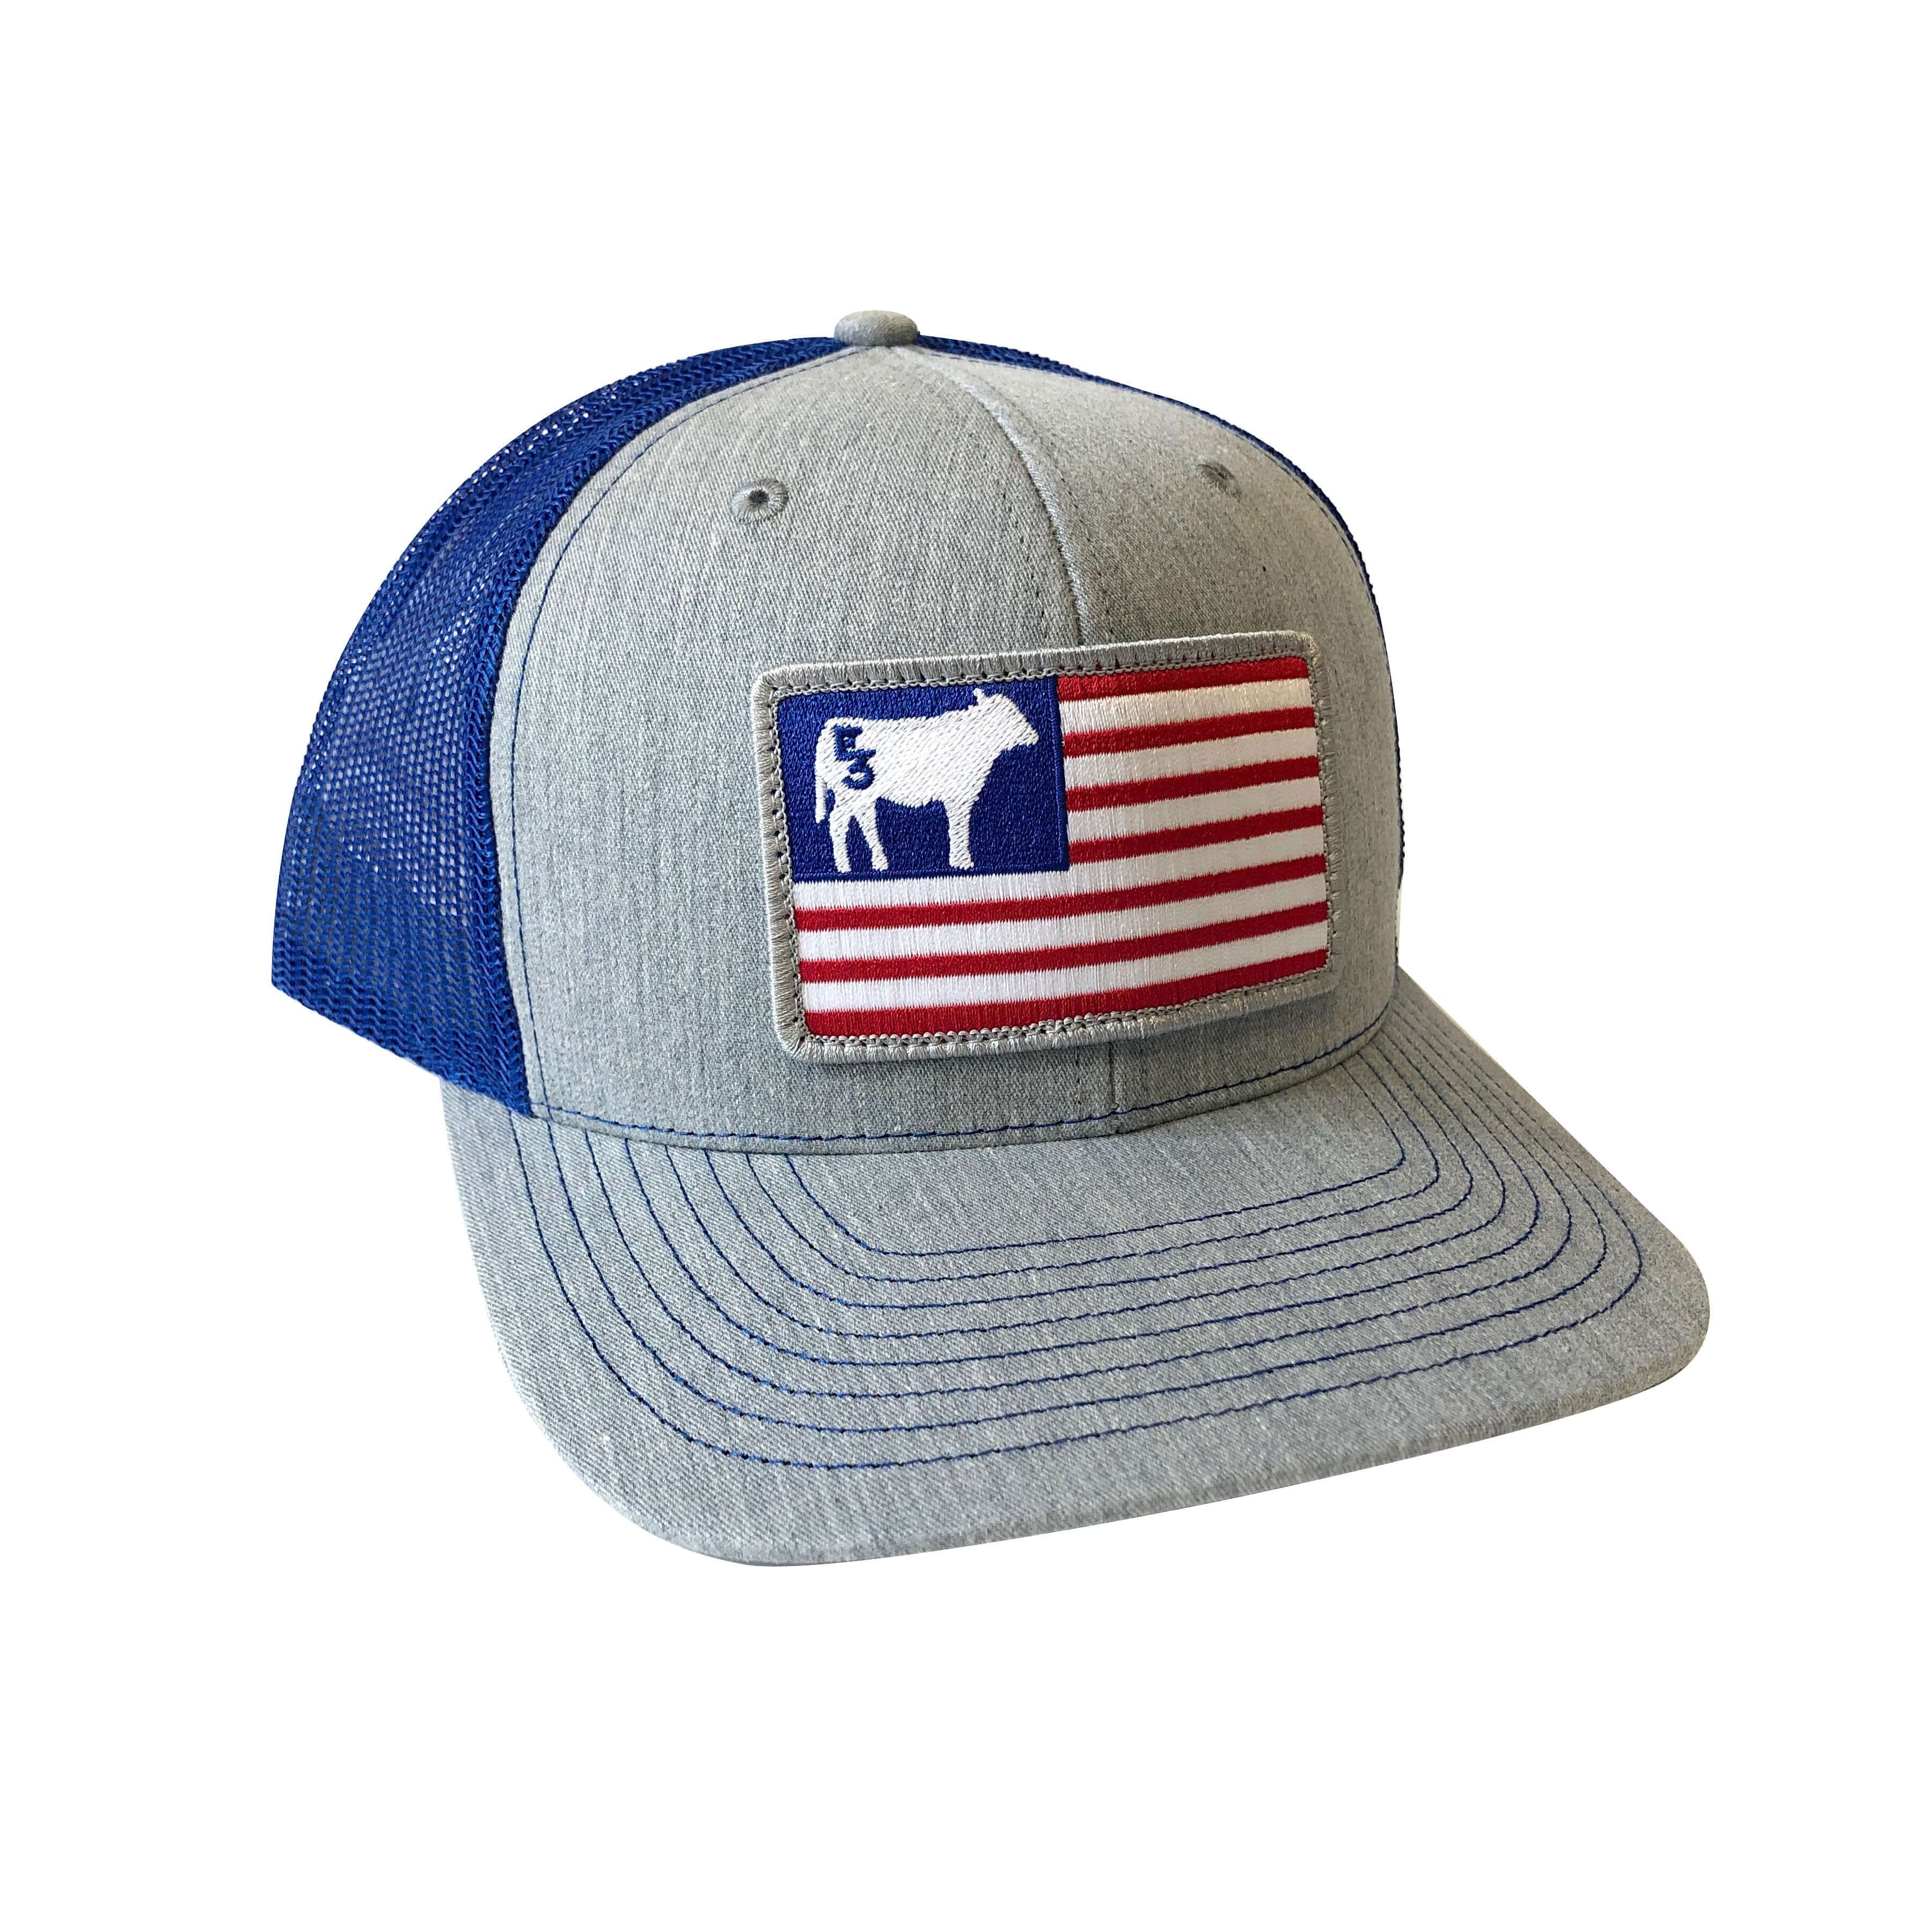 USA Steer Hat